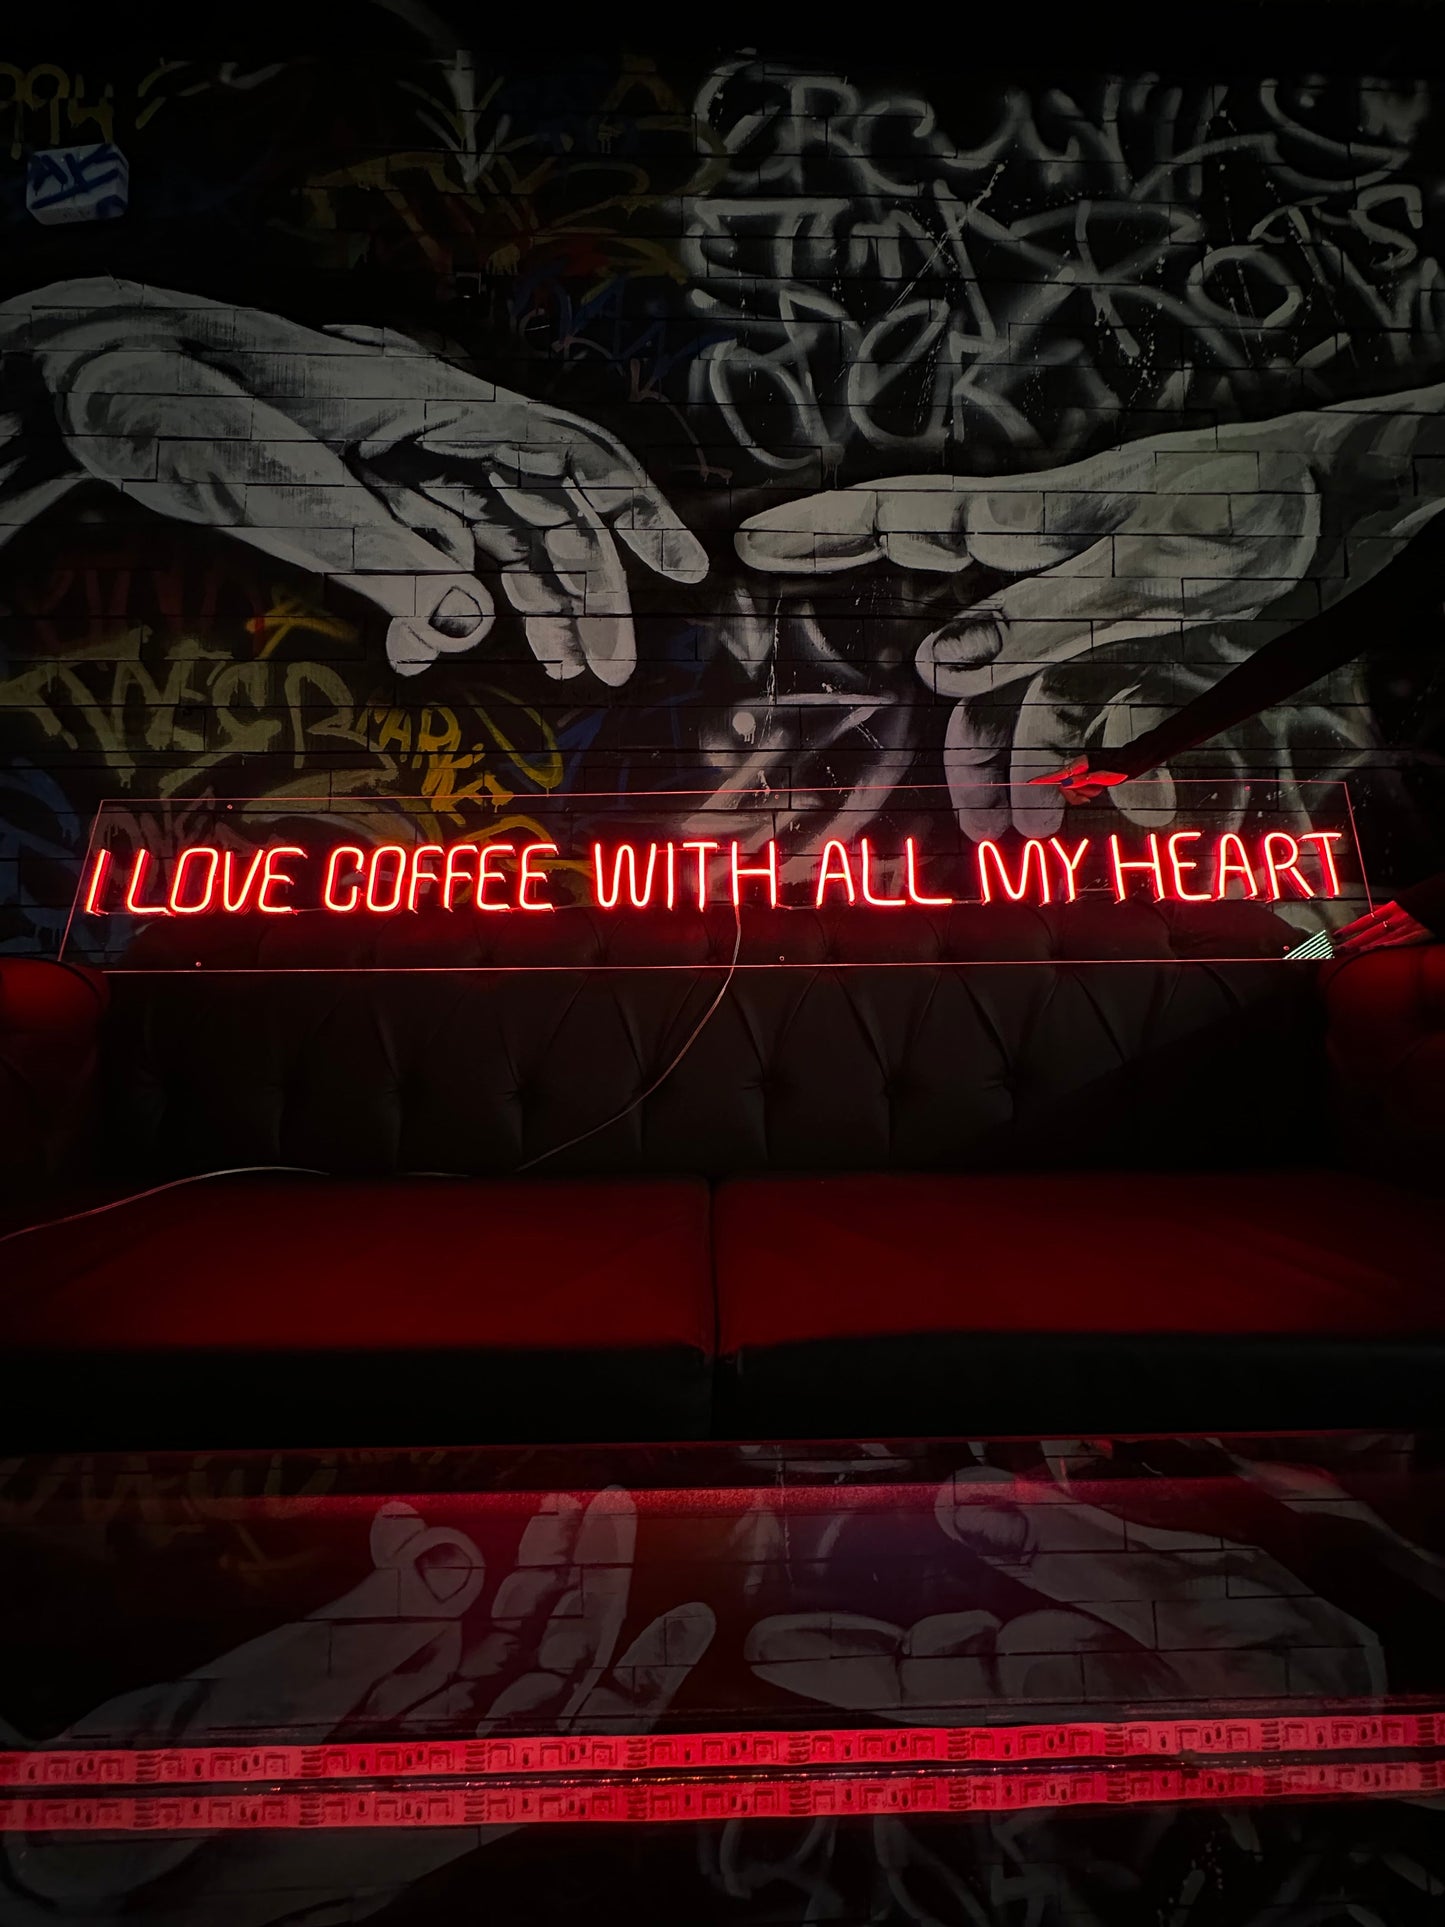 I Love Coffee Neon Sign